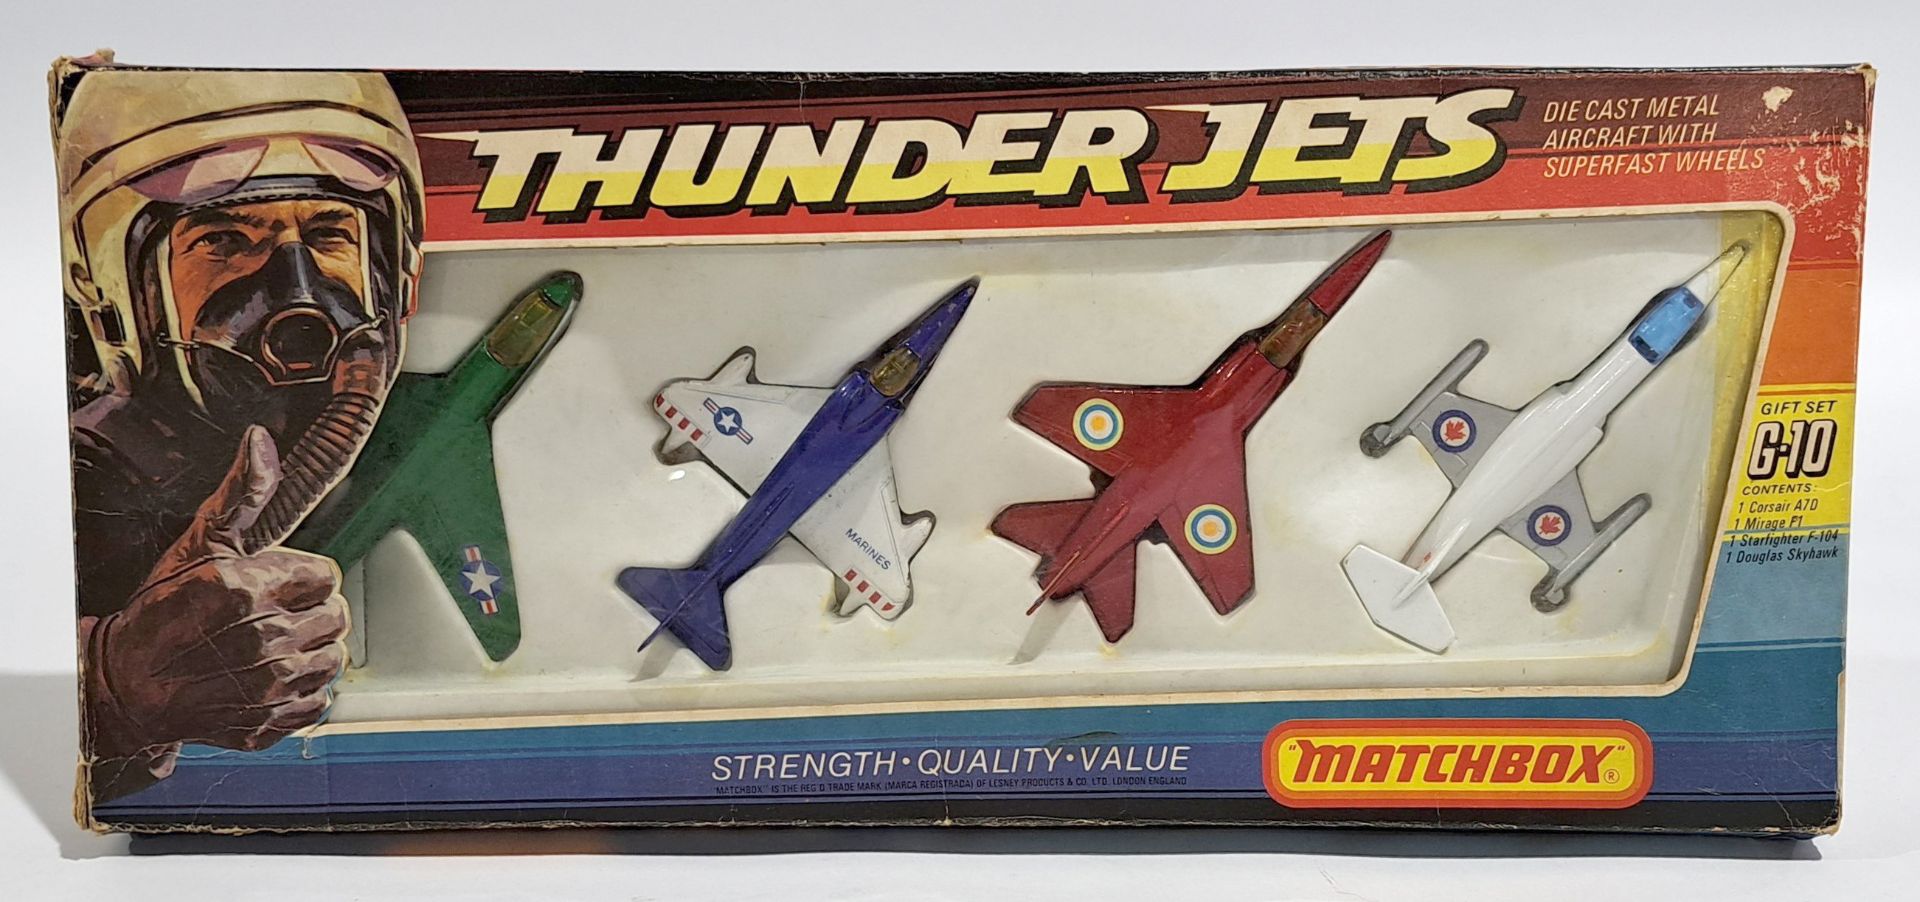 Matchbox Thunder Jets G-10 boxed